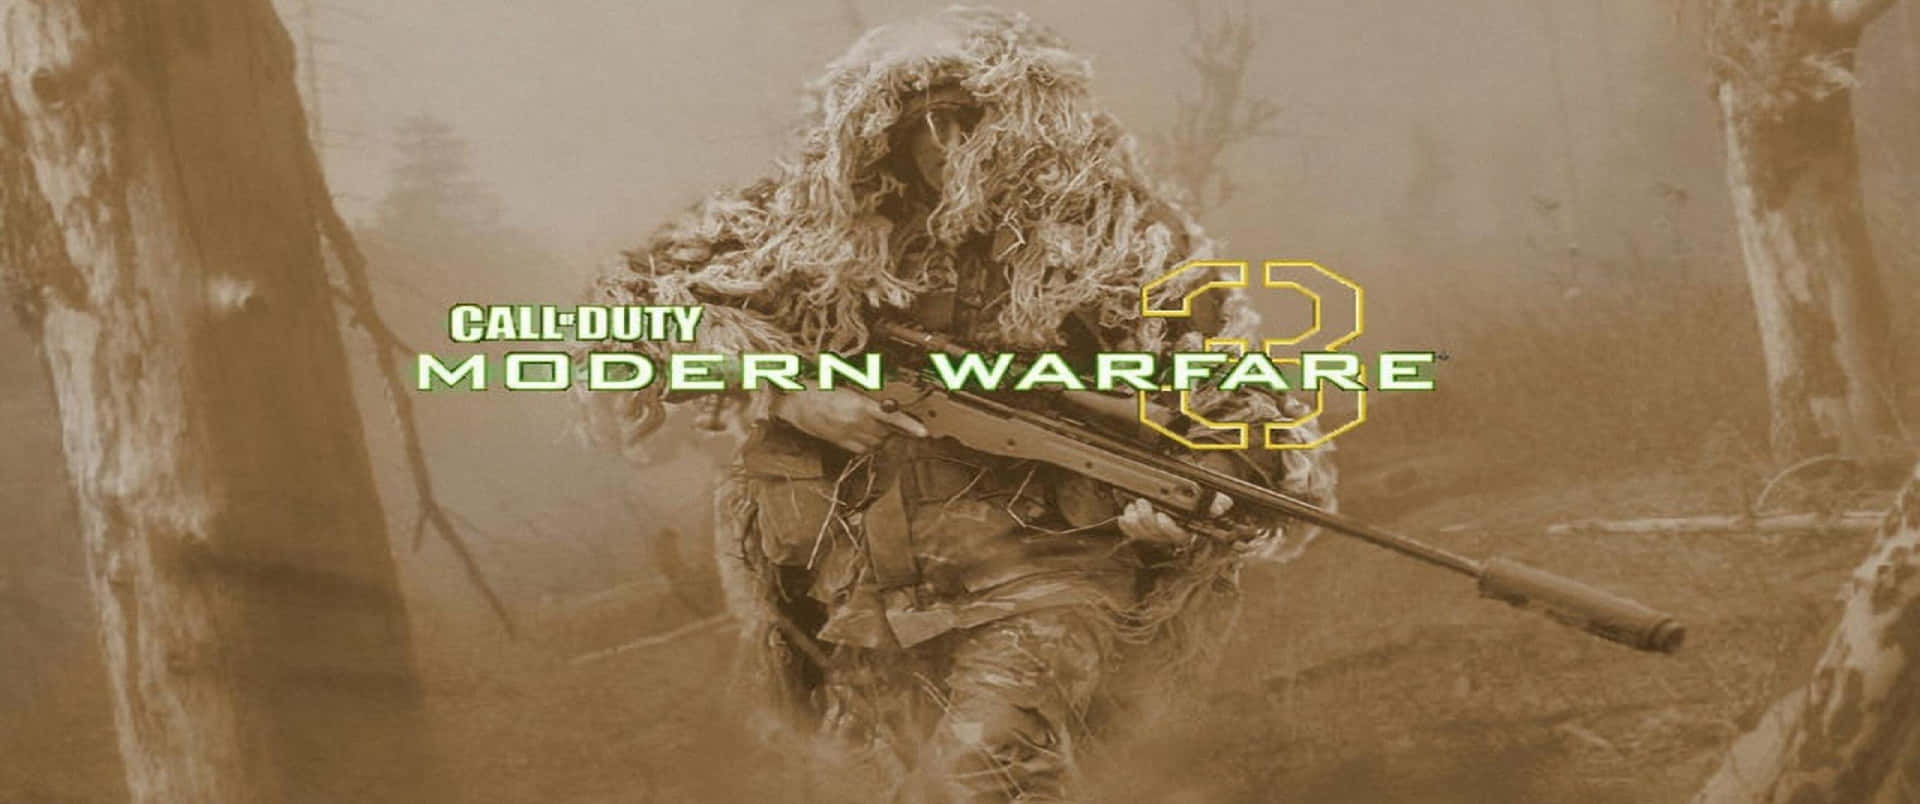 Soldatmed Kamouflage Nät 3440x1440p Call Of Duty Modern Warfare Bakgrundsbild.